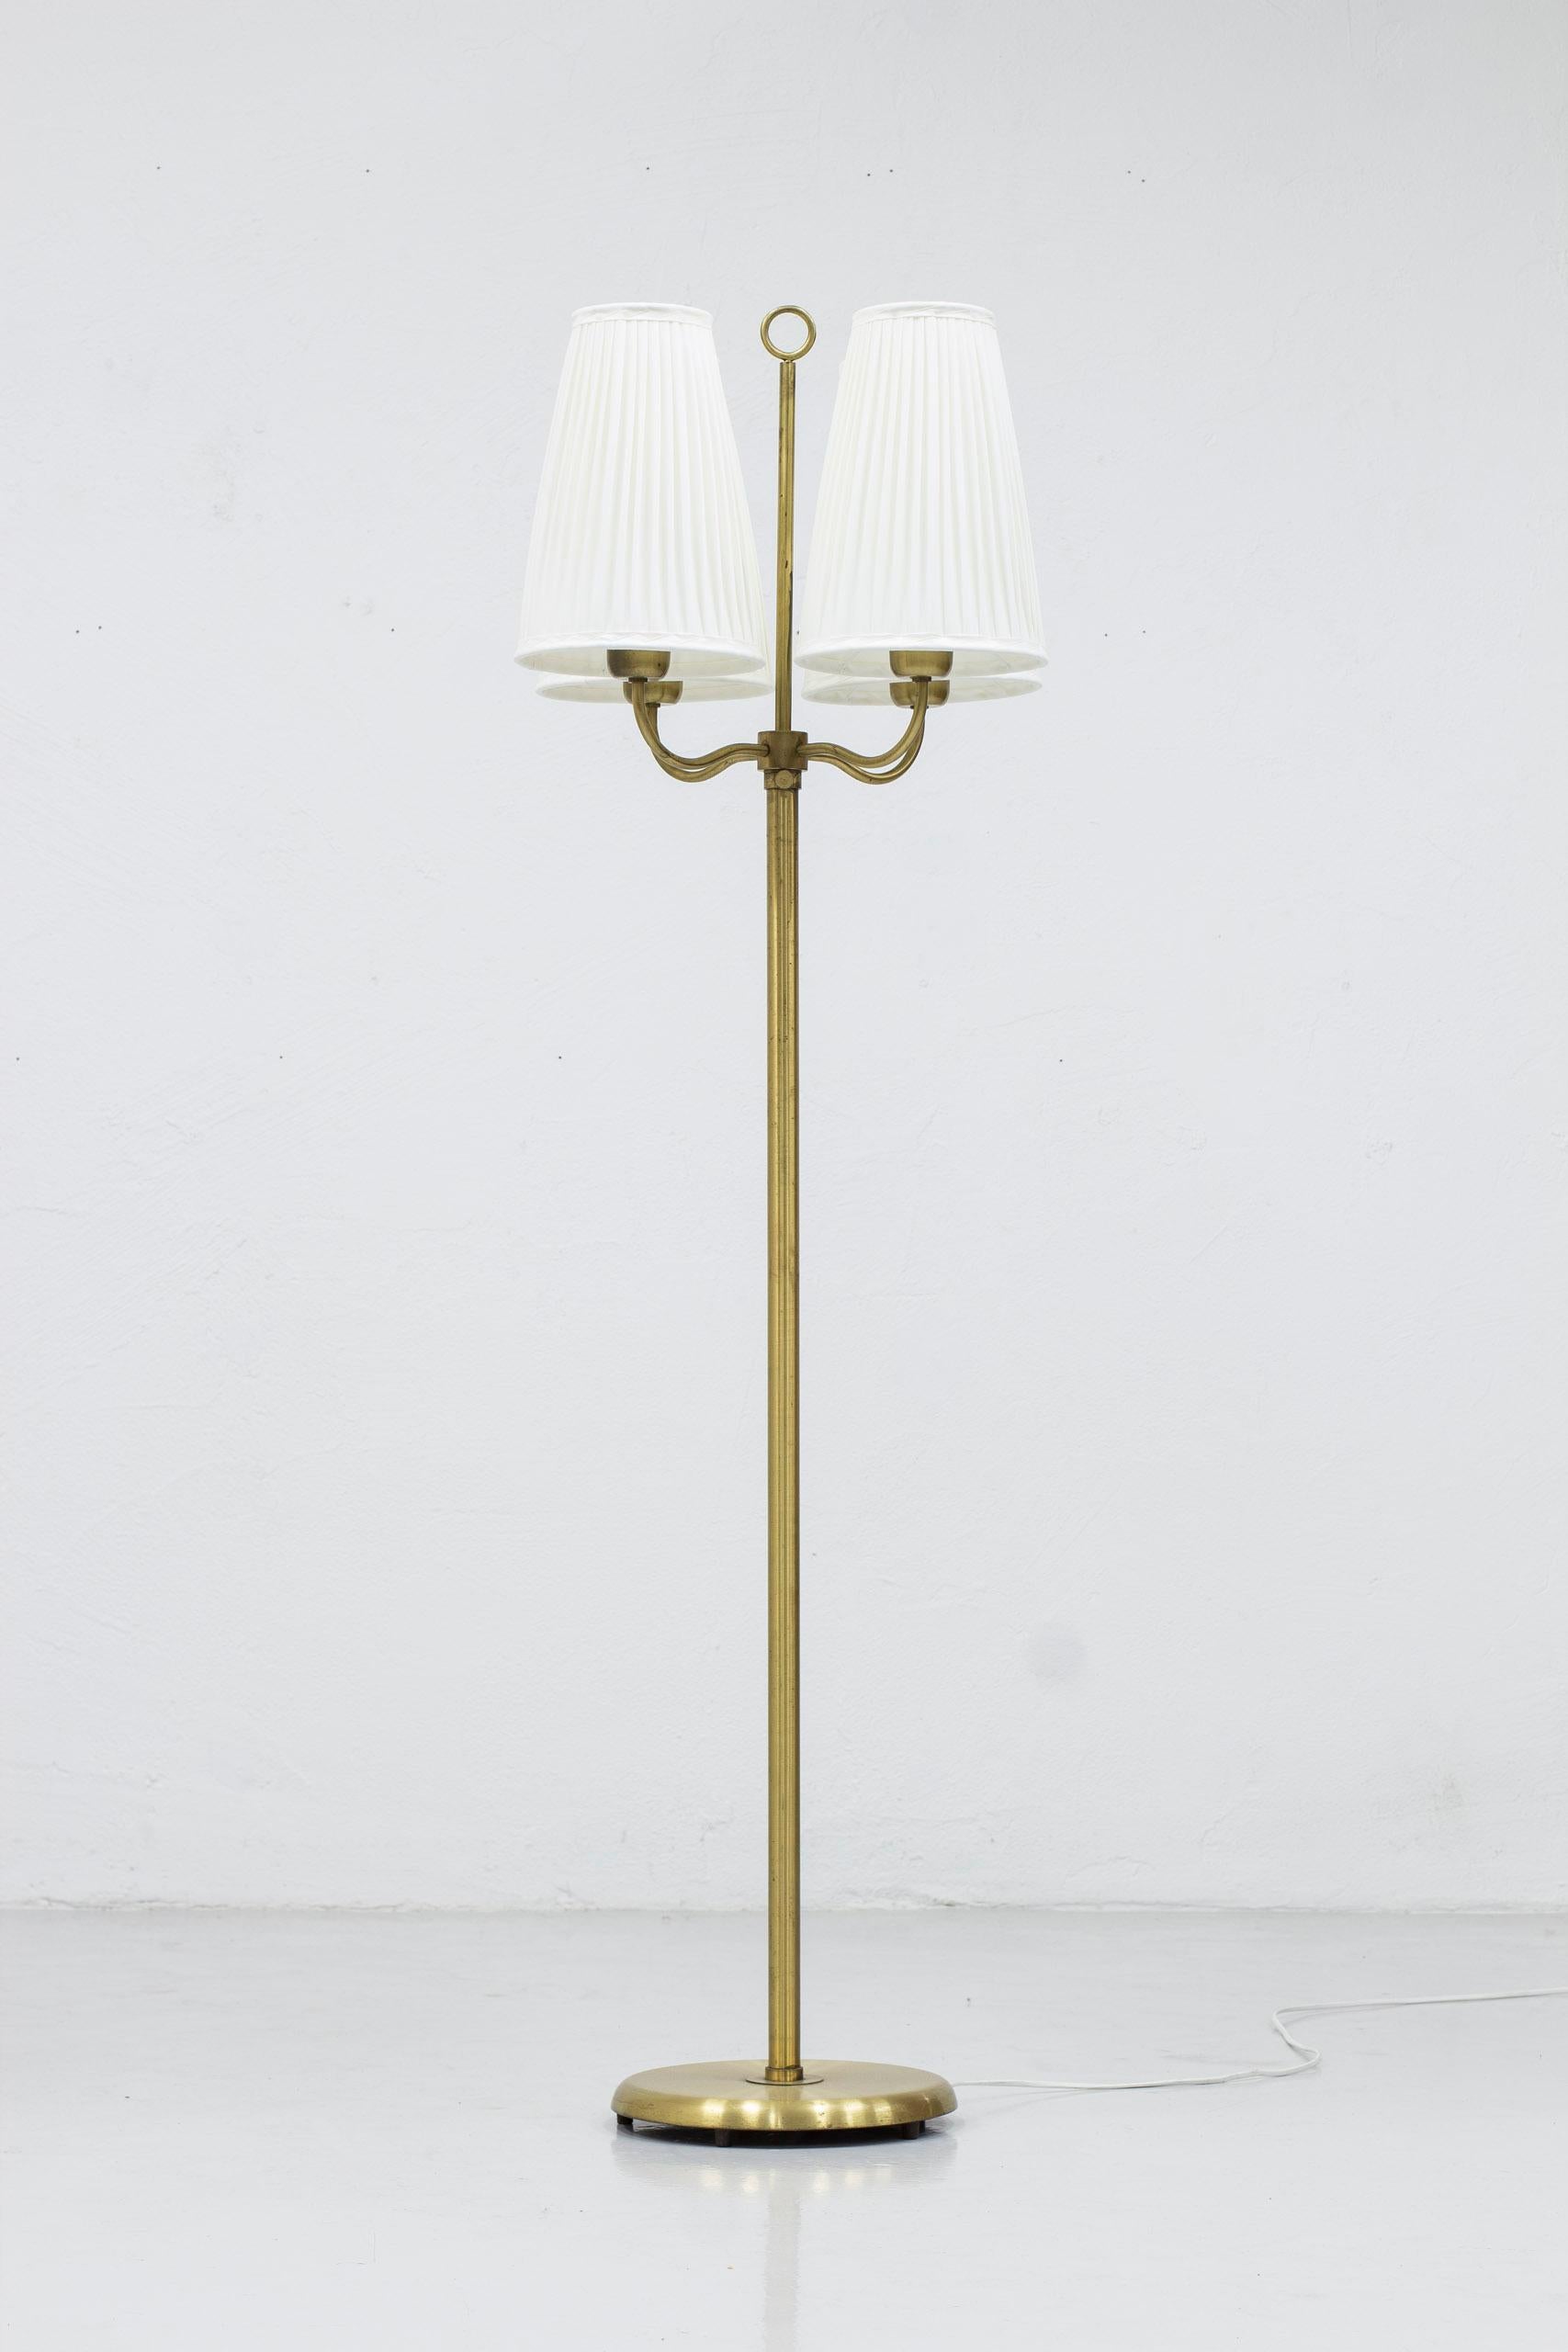 Scandinavian Modern Swedish Modern floor lamp in brass in the manner of Josef Frank, Sweden, 1940s For Sale